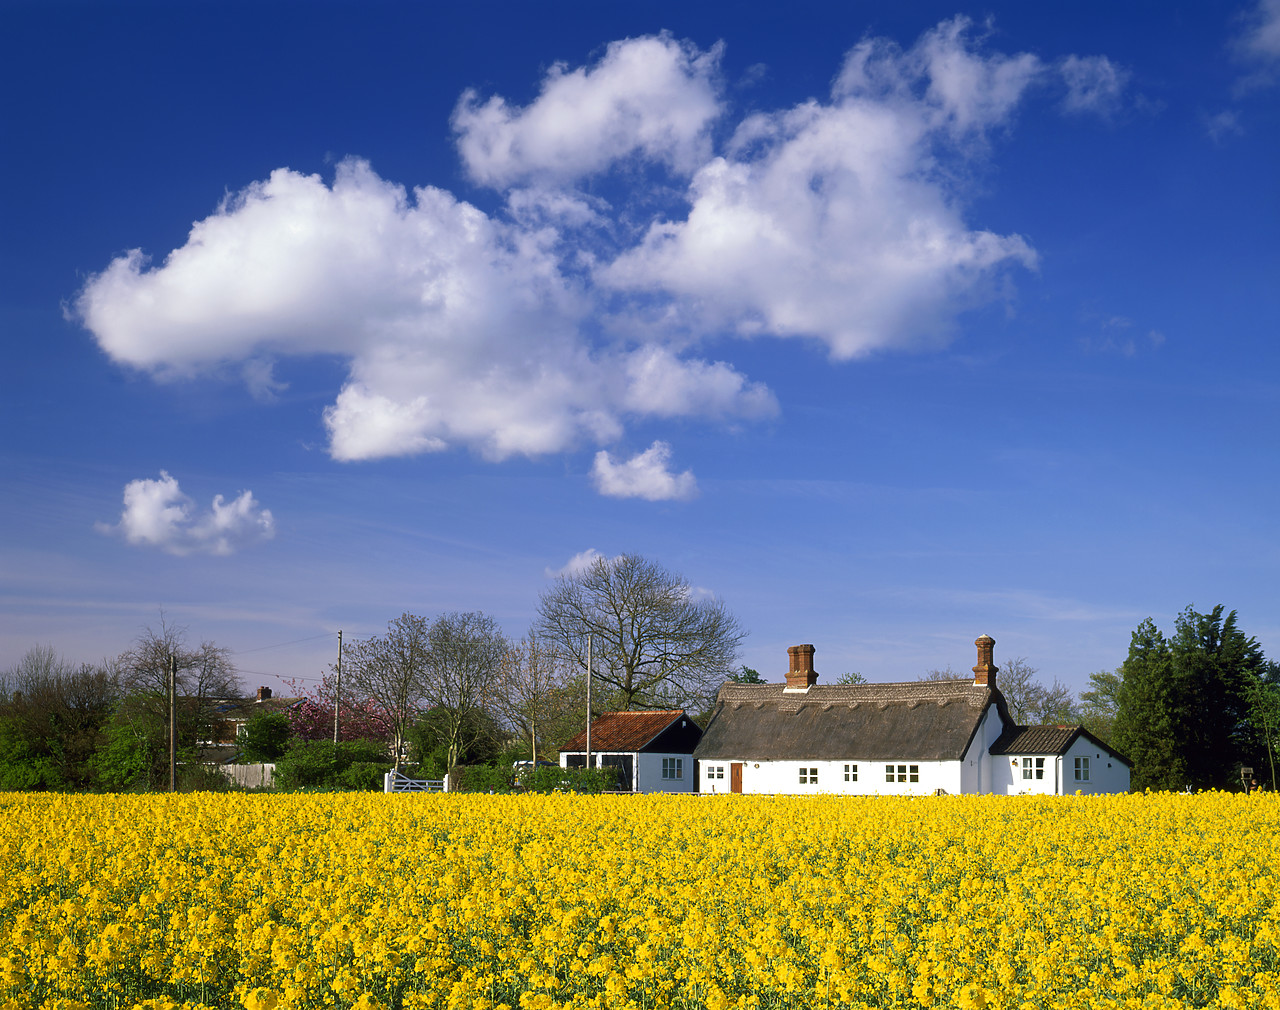 #970160-4 - Rape Field & Thatched Cottage, Ketteringham, Norfolk, England